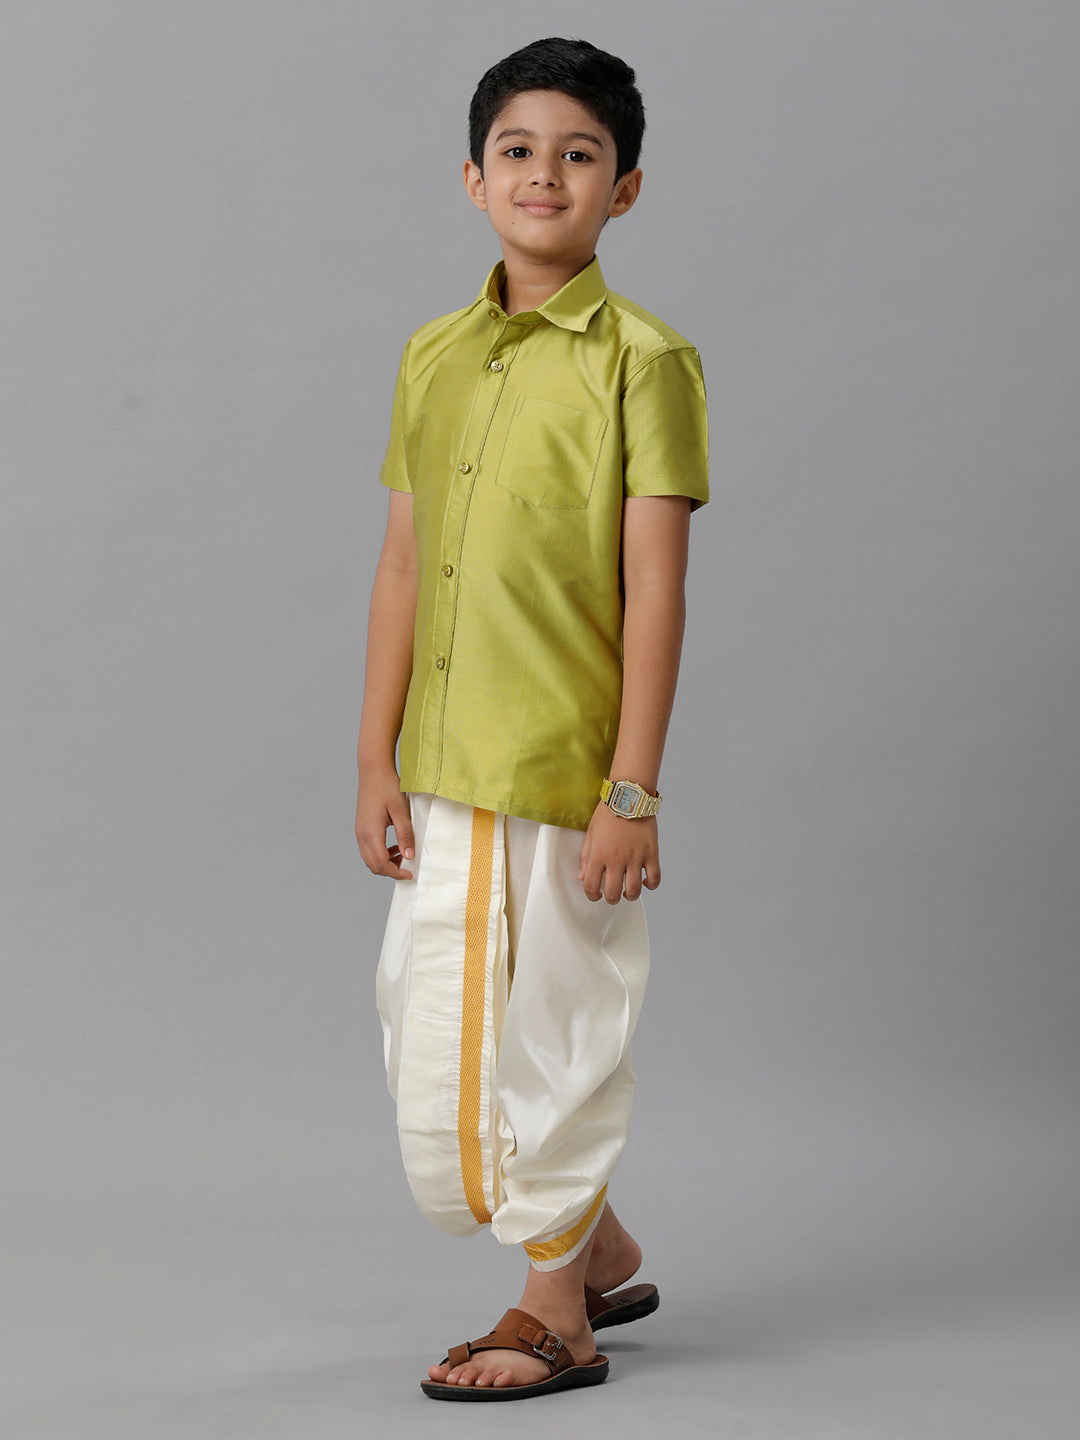 Boys Silk Cotton Lemon Green Half Sleeves Shirt with Soft Silk Panchakacham Combo K44-Front view